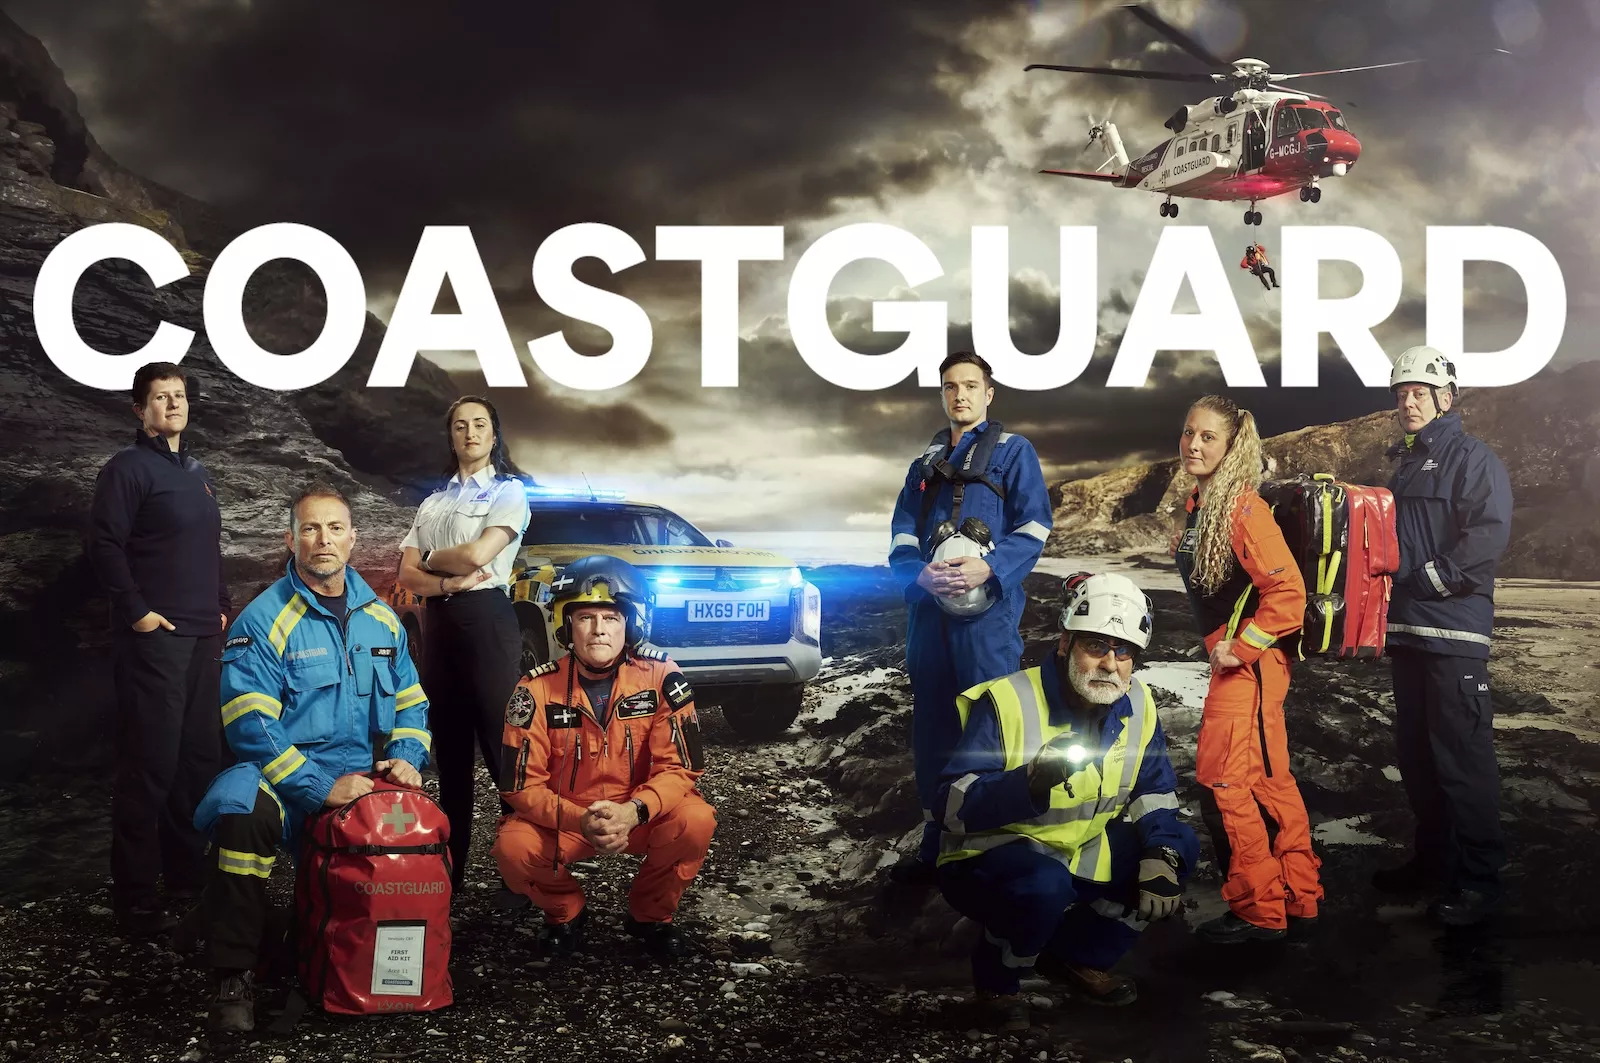 Coastguard documentary promo shot